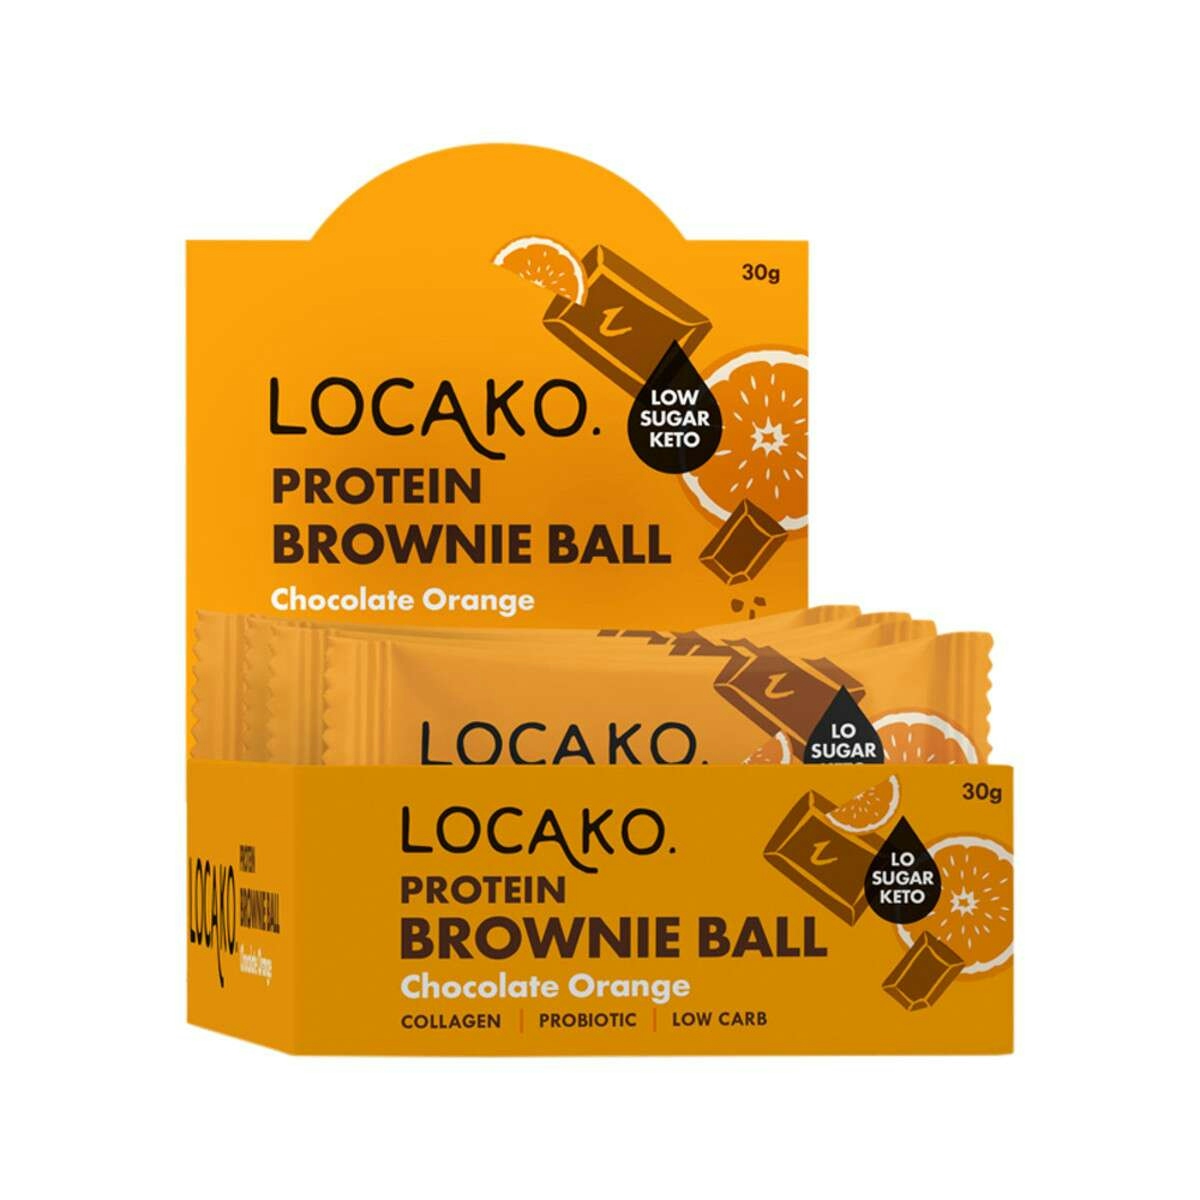 image of Locako Protein Brownie Ball Chocolate Orange 30g x 10 Display on white background